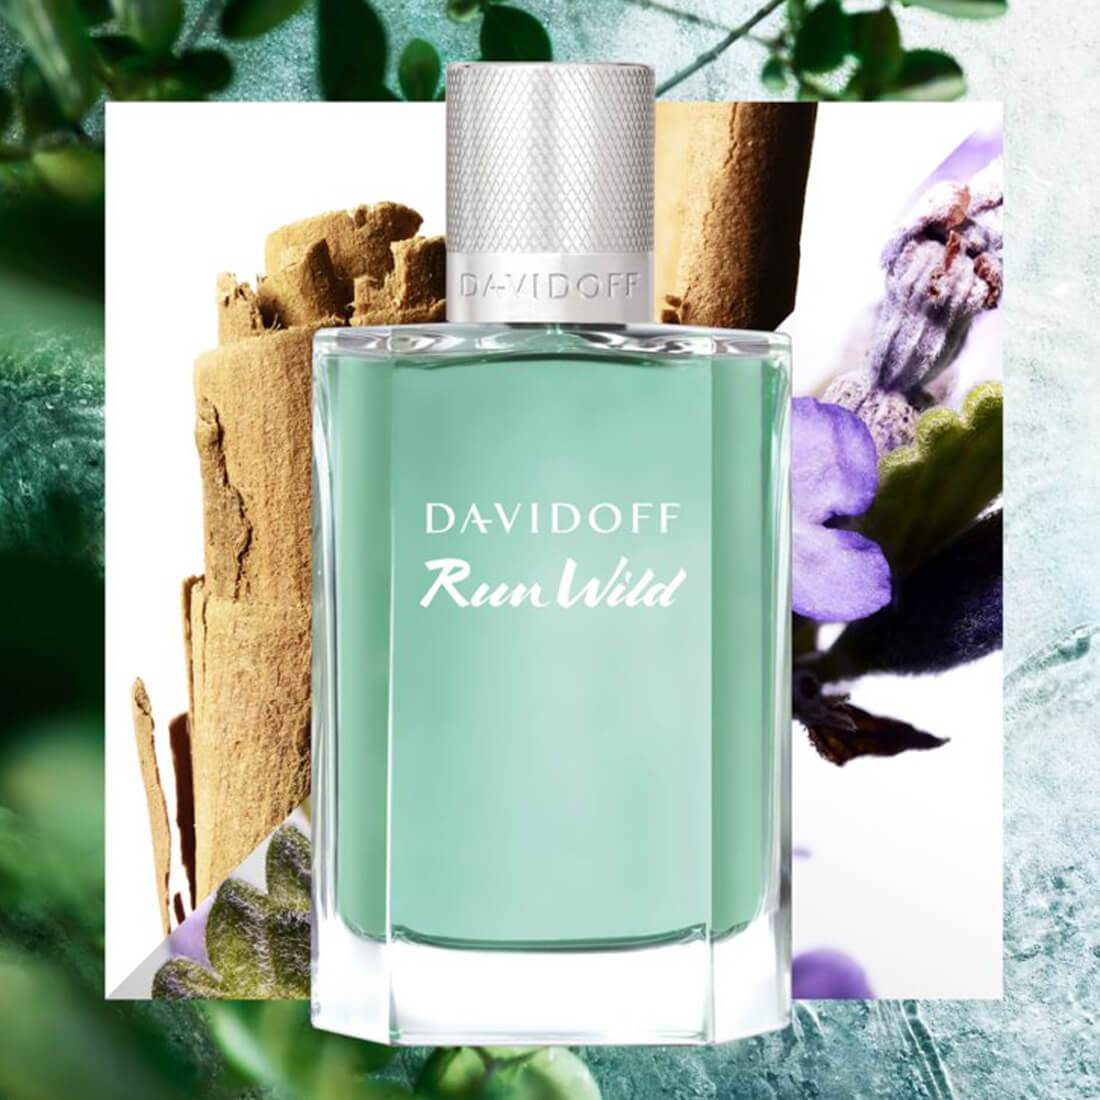 Davidoff Run Wild EDT For Men | My Perfume Shop Australia